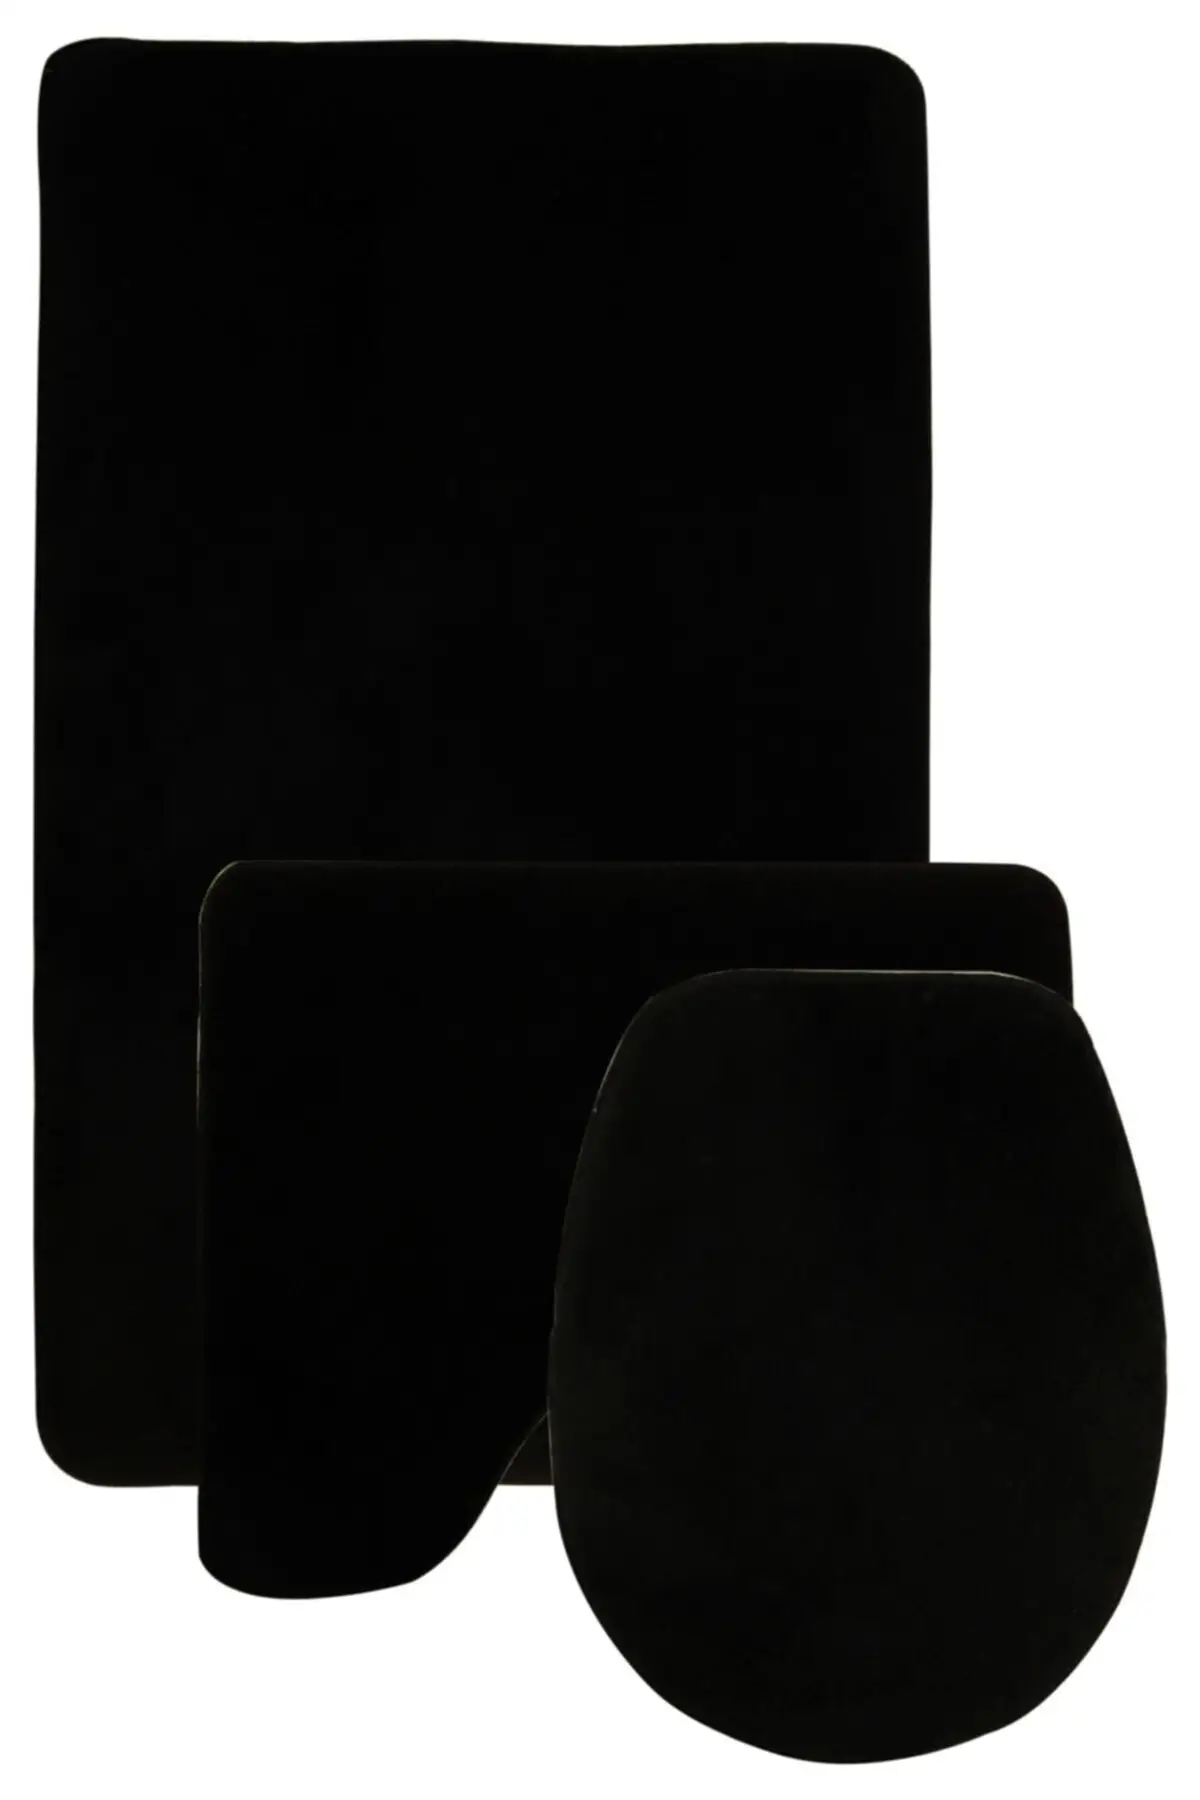 

3 Piece Plain Black Ultrasoft Bathroom Carpet Mat Set Non-Slip Toilet Seat Set Water Absorbent Washable Home Office Decoration